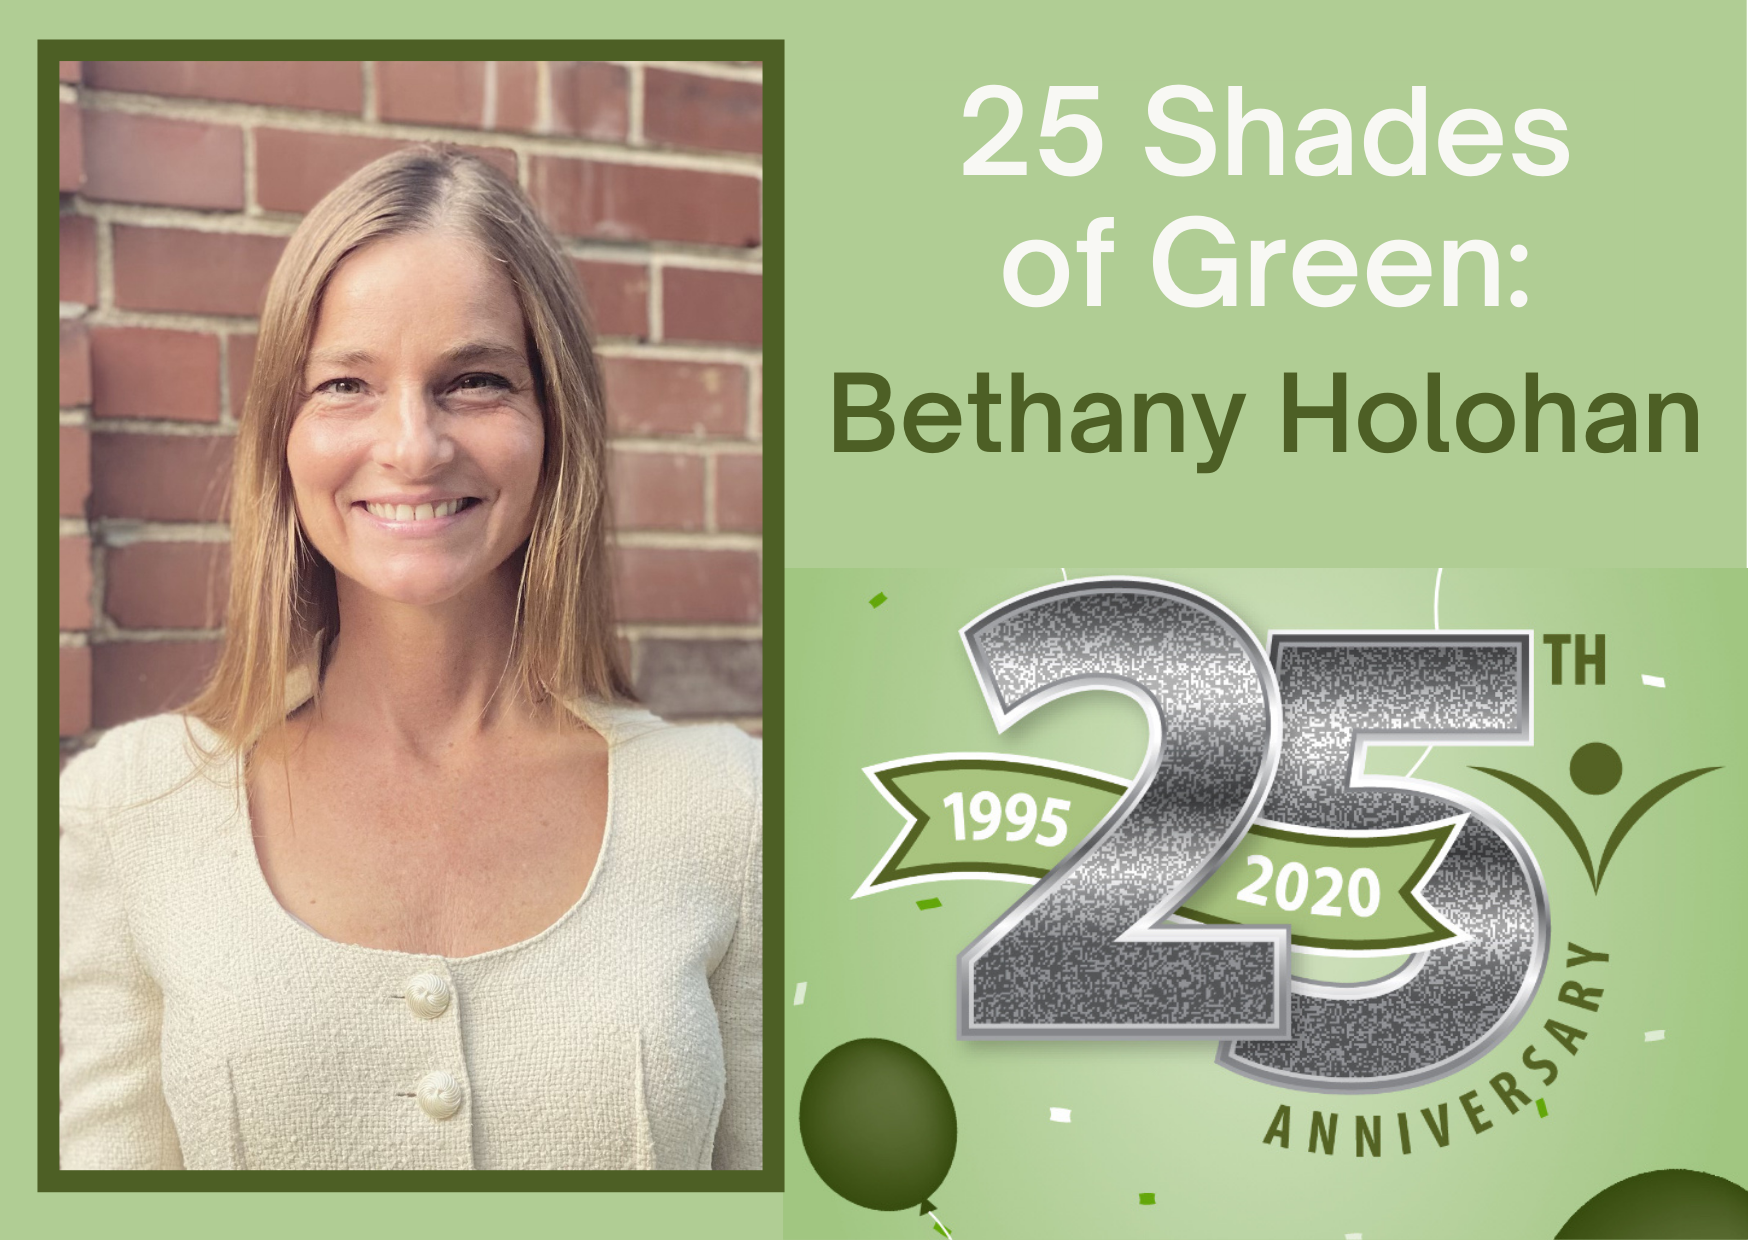 Bethany Holohan Shades of Green.png